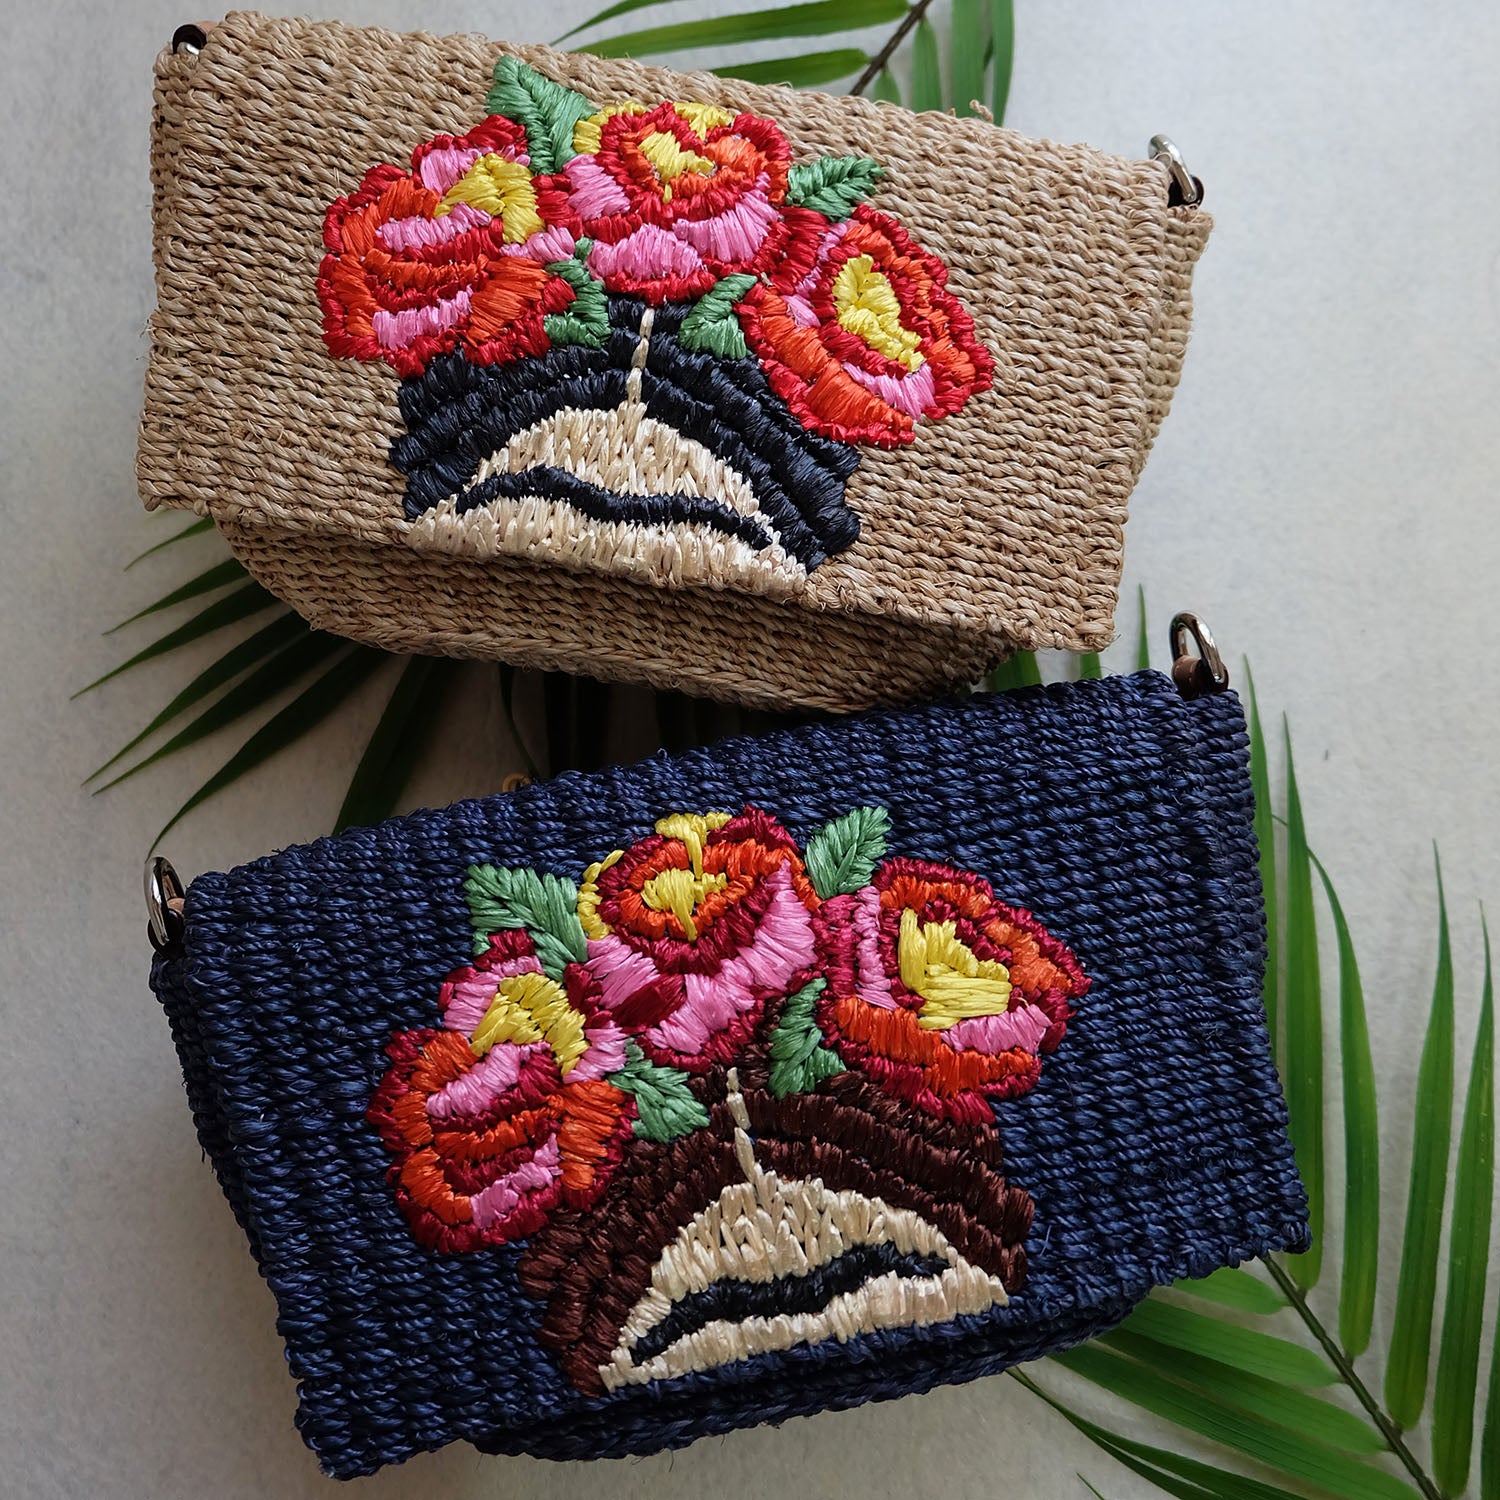 Mexican Cross-stitch Crossbody Mexican Artisanal Bag 